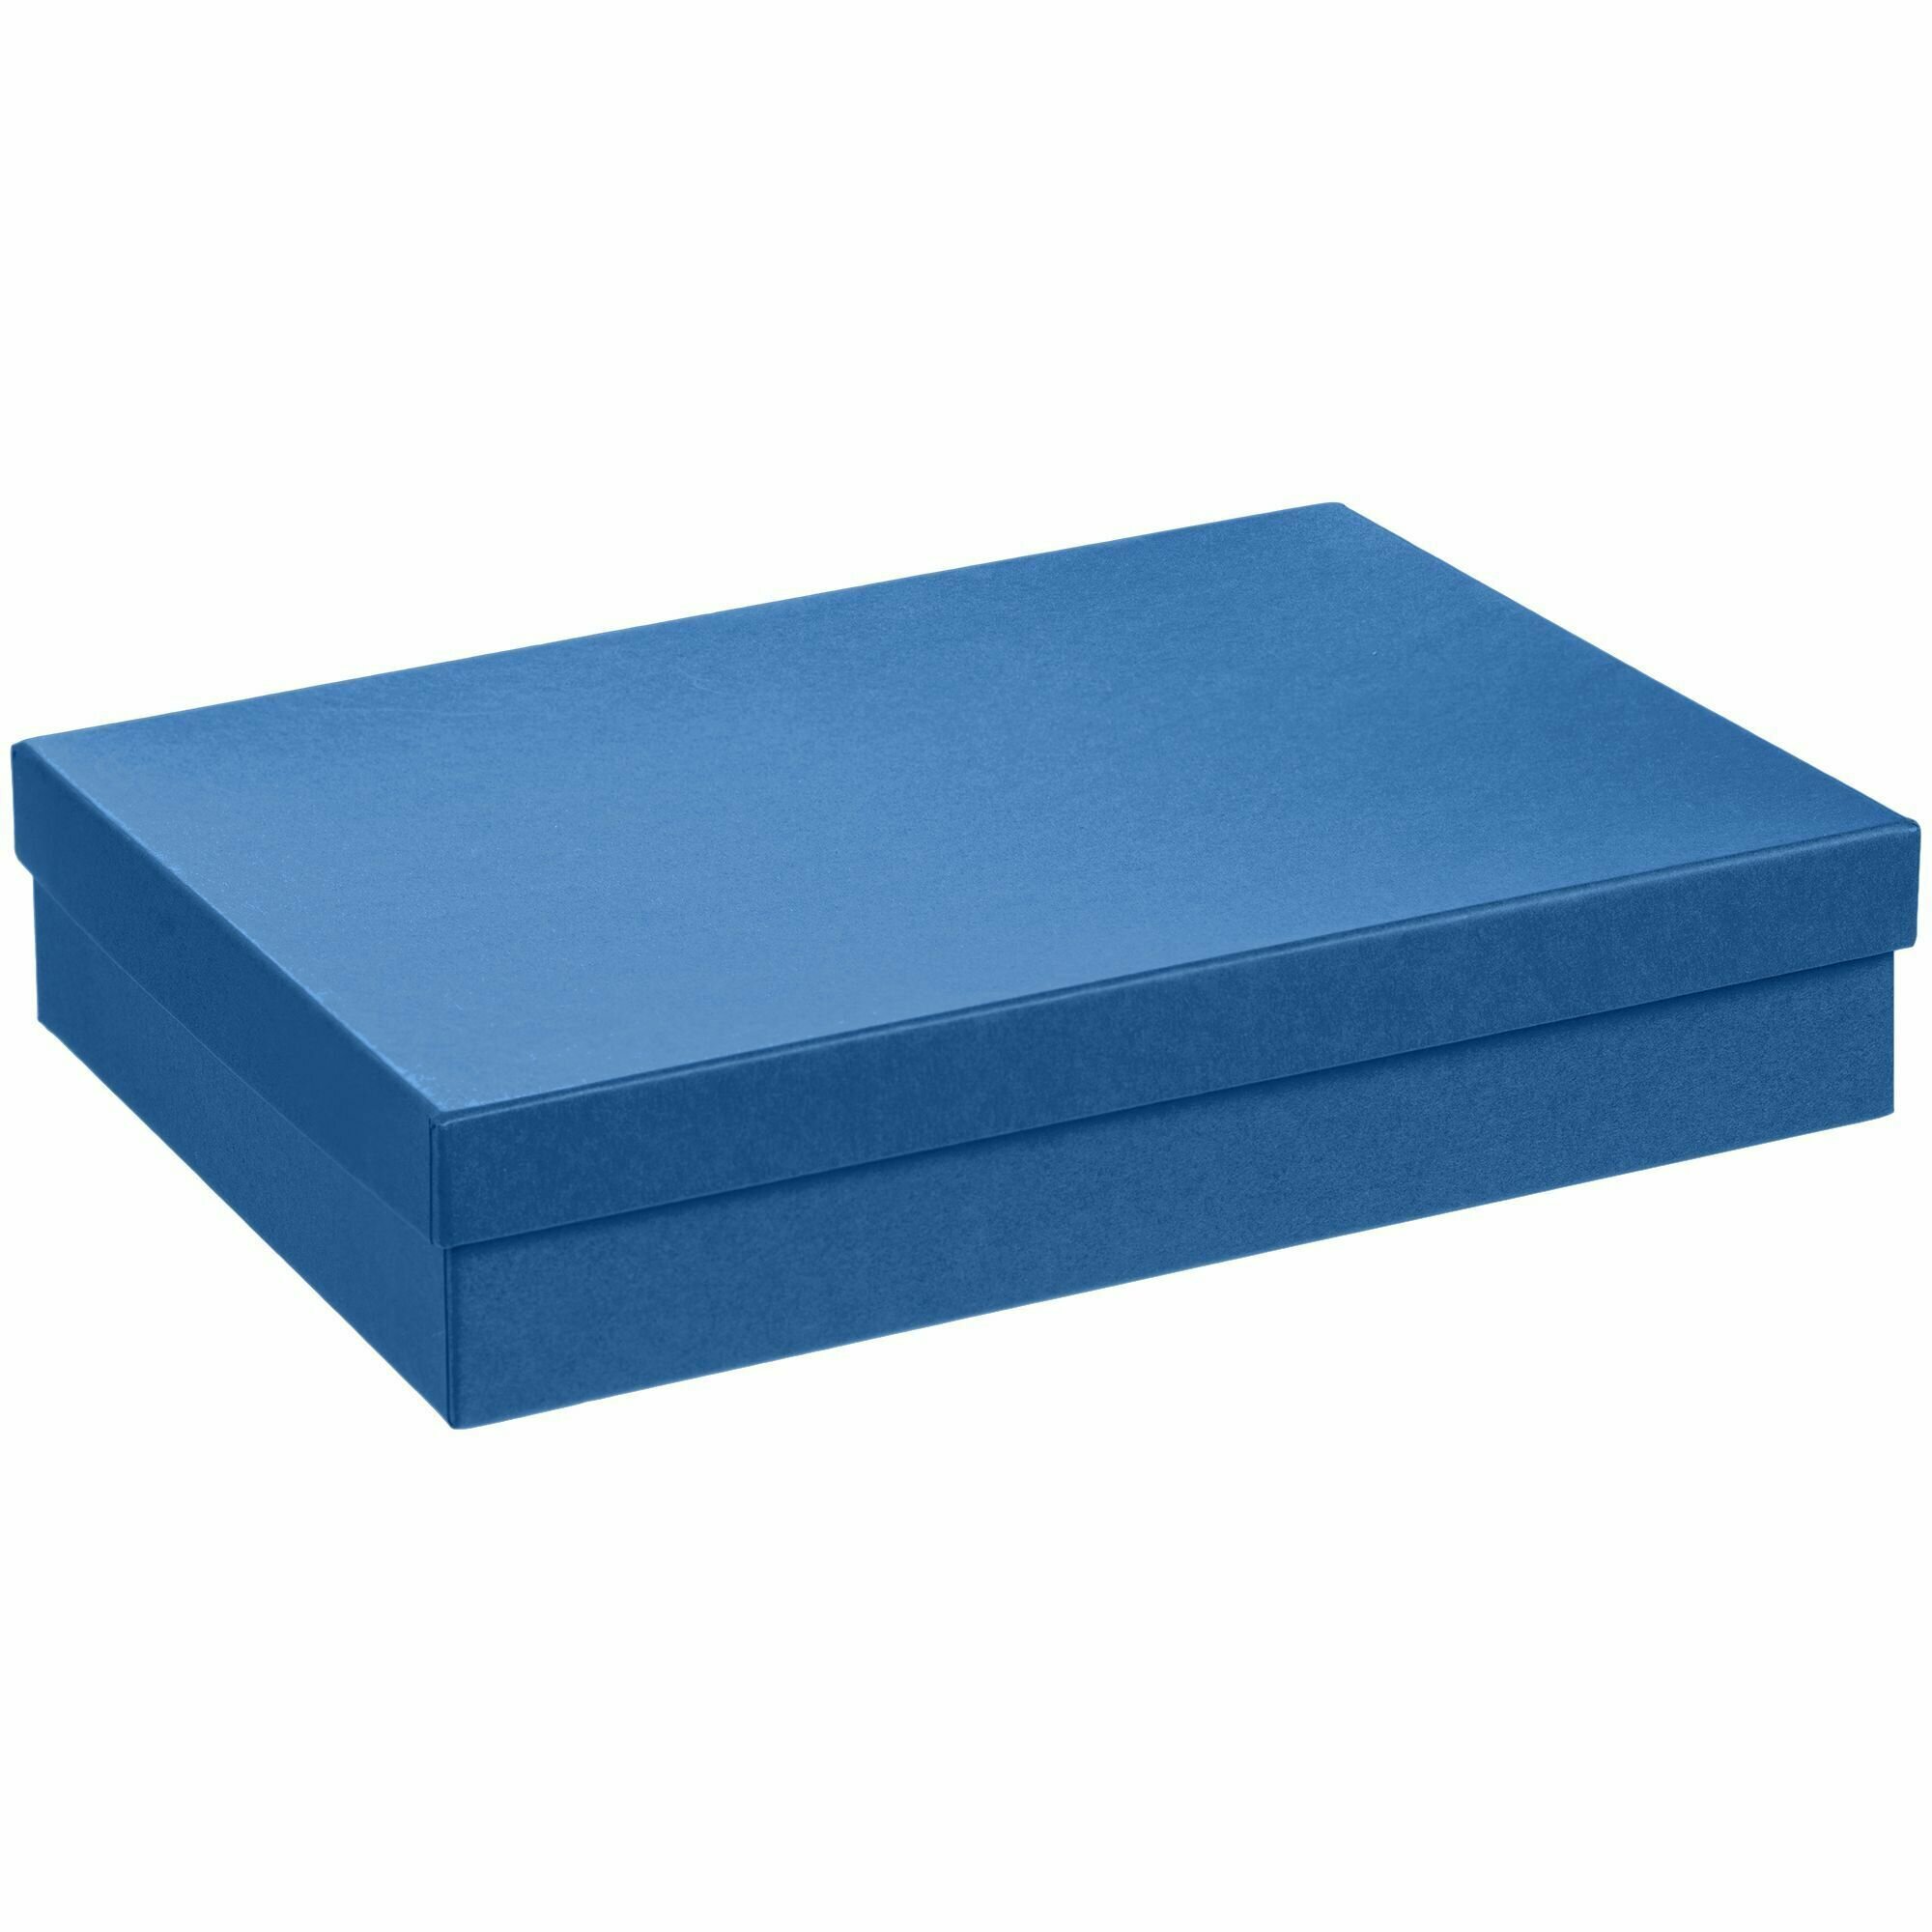 Синяя подарочная коробка для упаковки 25х20х5 см, набор для подарков и праздника